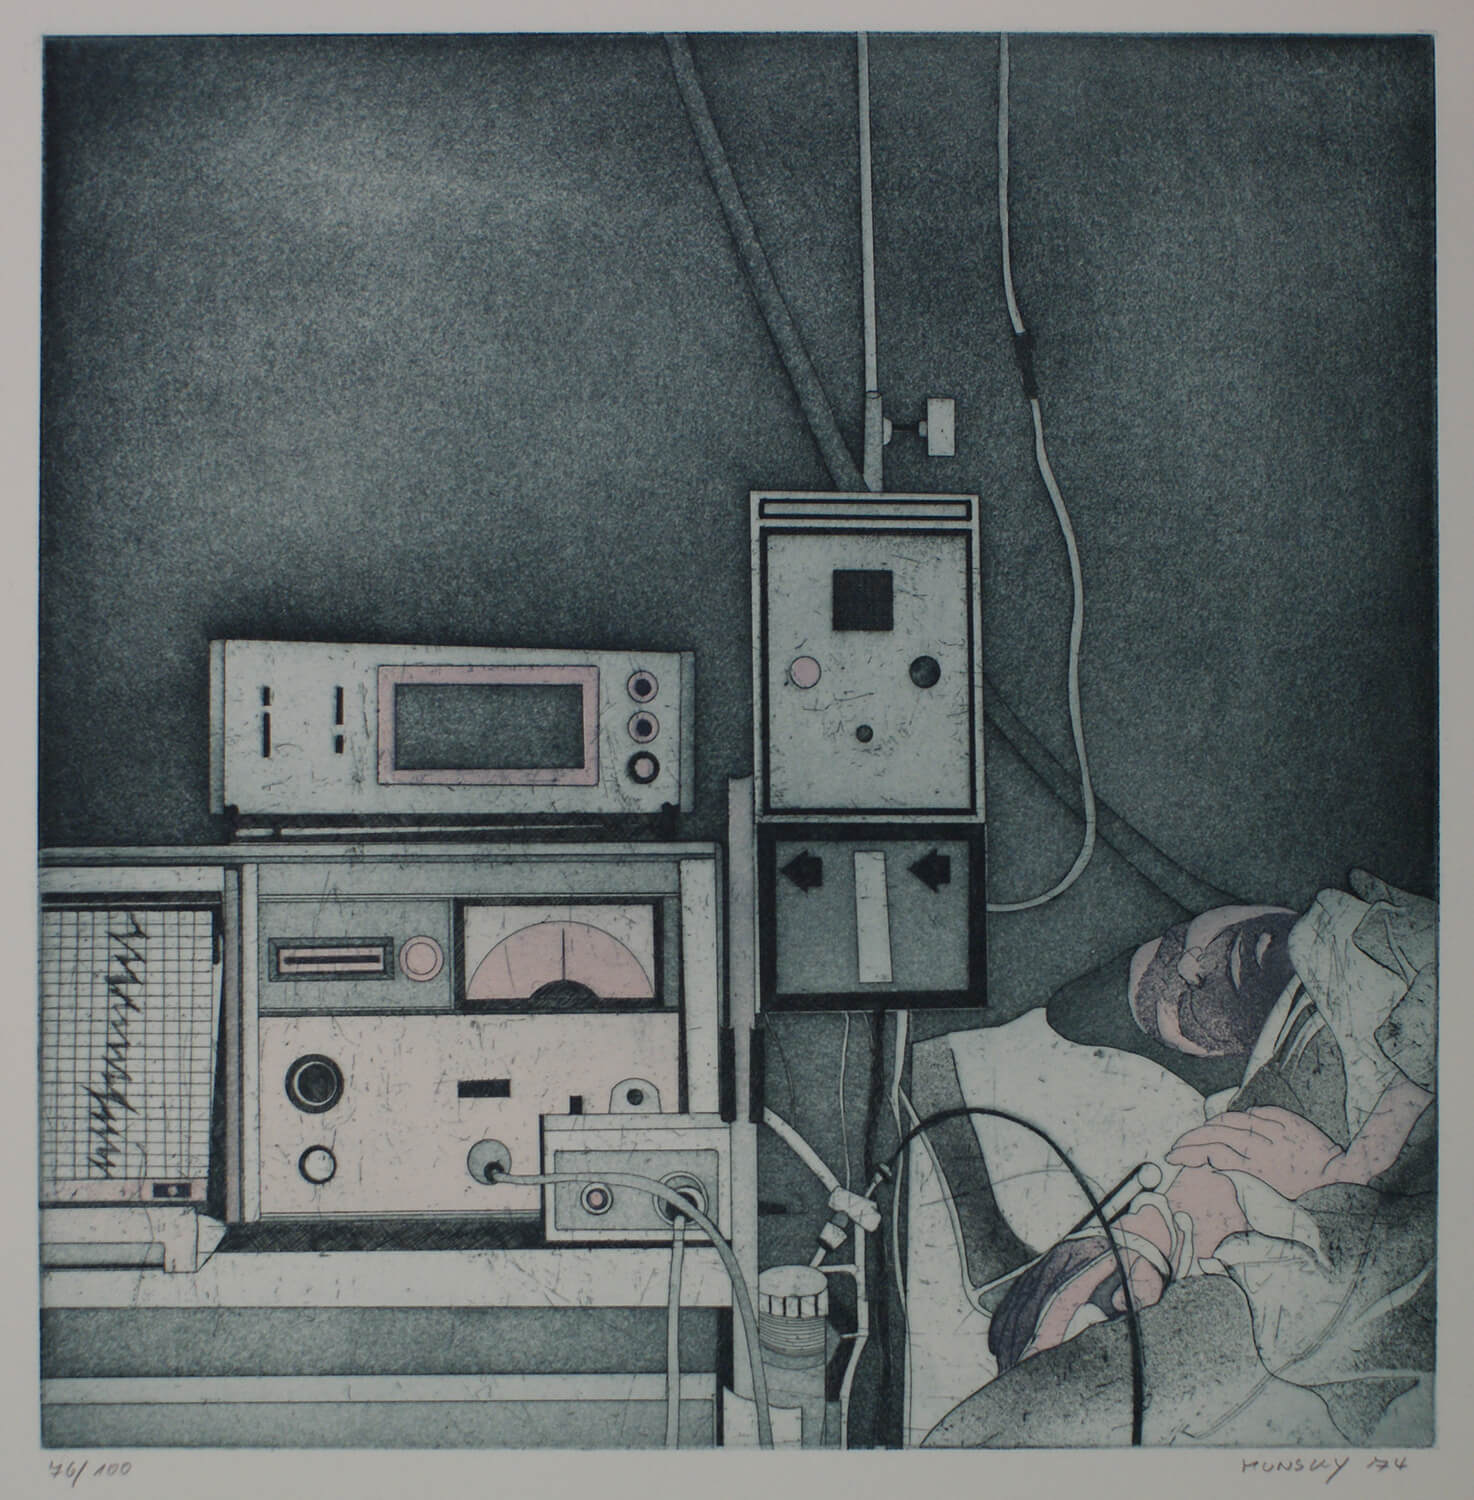 Maina-Miriam Munsky, Signale, 1974, Farbradierung, Auflage: 100, Bild: 39,5 x 39,5 cm, Blatt: 76,5 x 54 cm